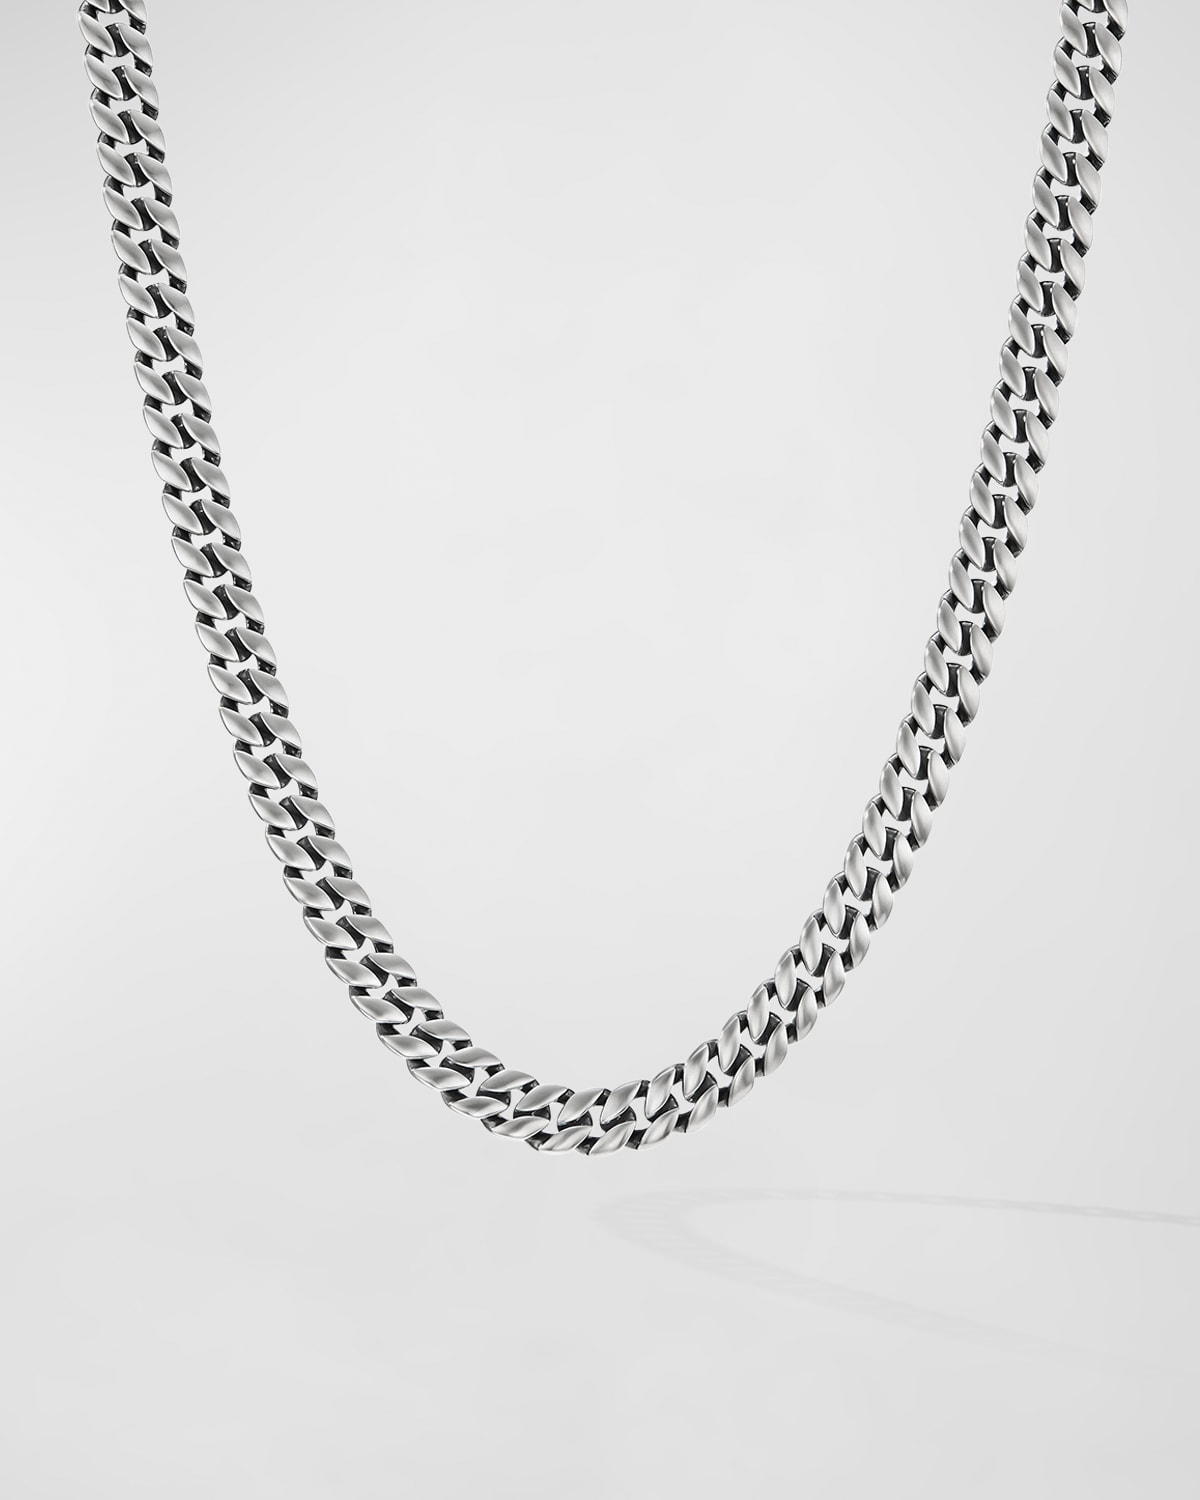 David Yurman Men's Curb Chain Necklace In Sterling Silver, 8mm, 18"l